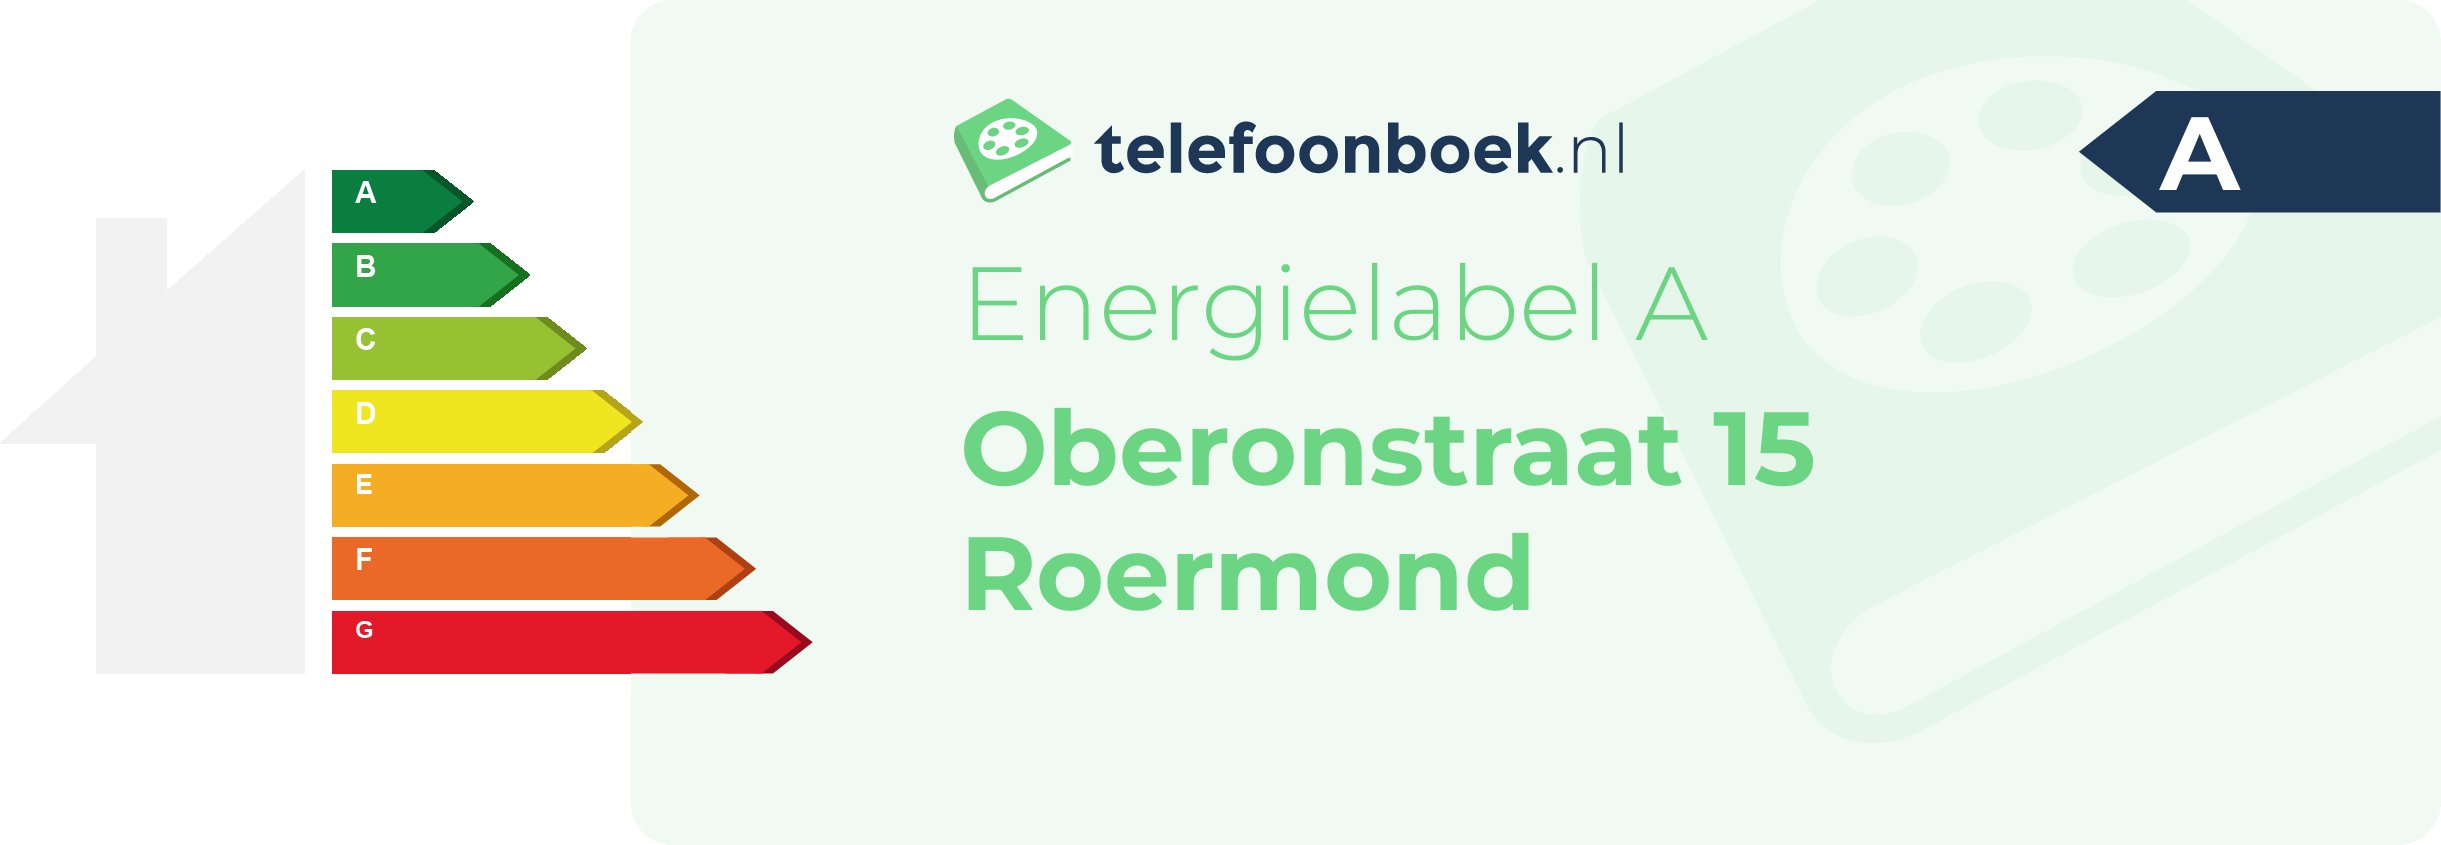 Energielabel Oberonstraat 15 Roermond